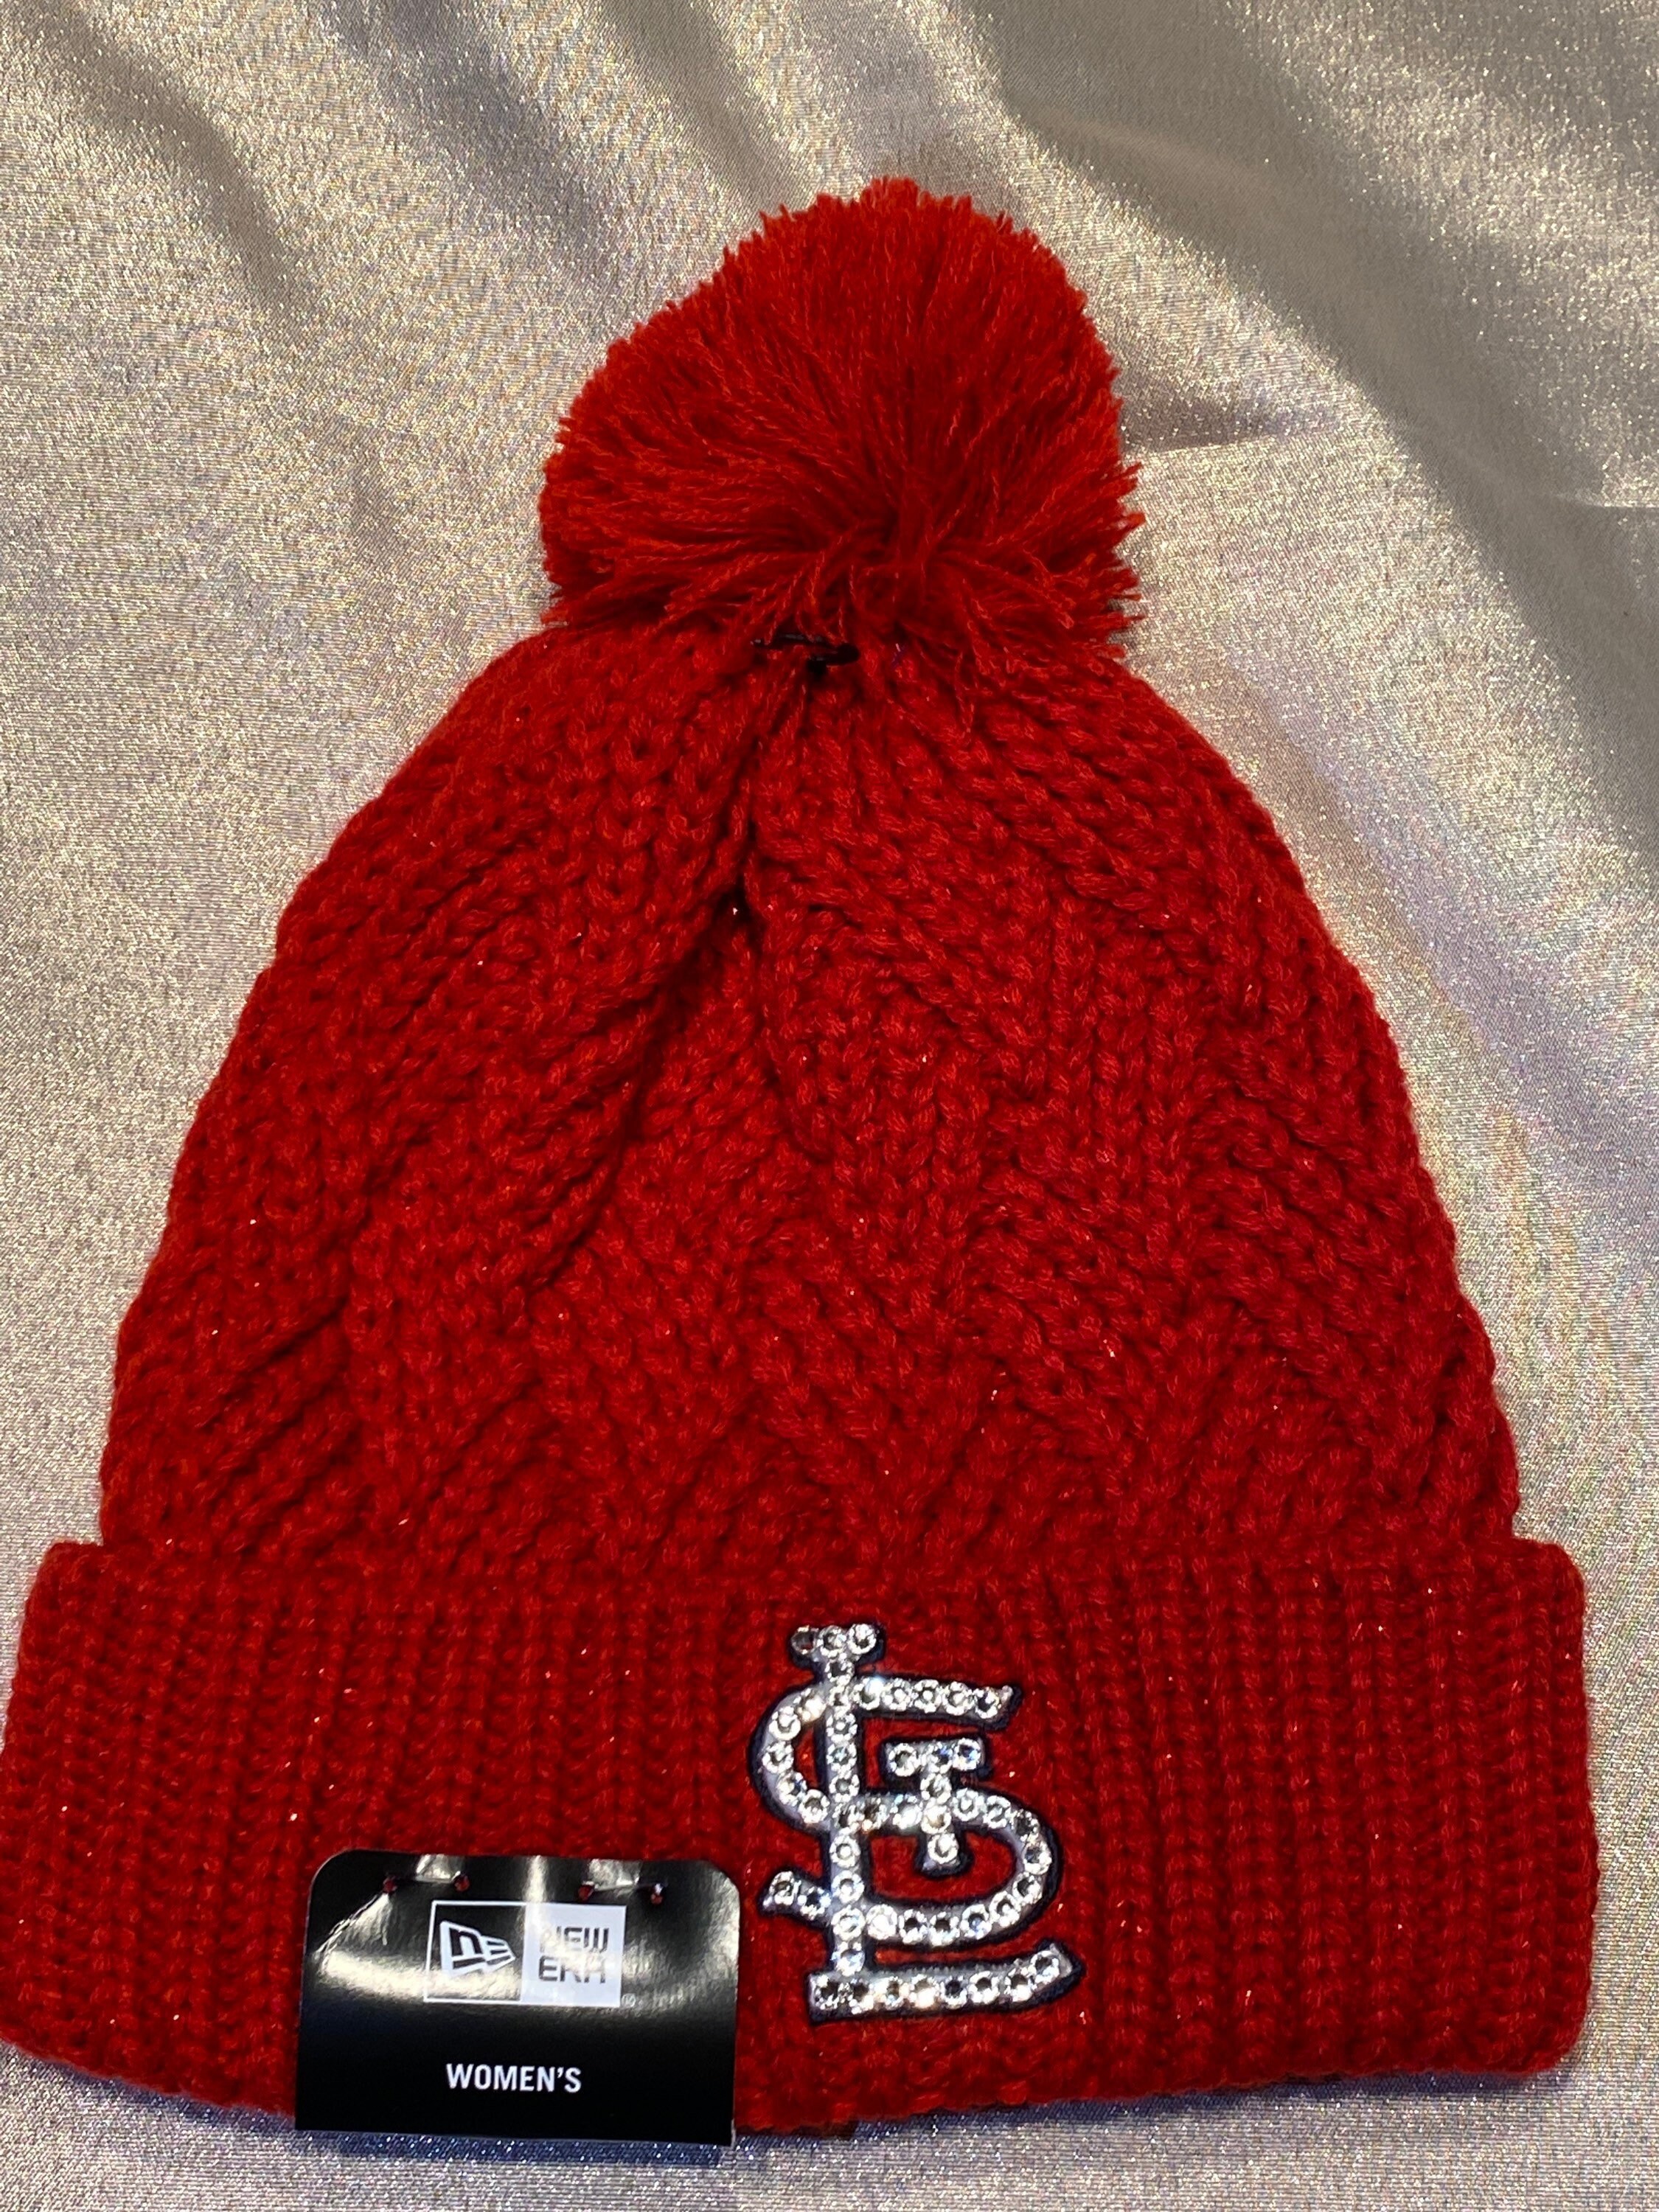 St. Louis Flag Knit Beanie Hat – Series Six